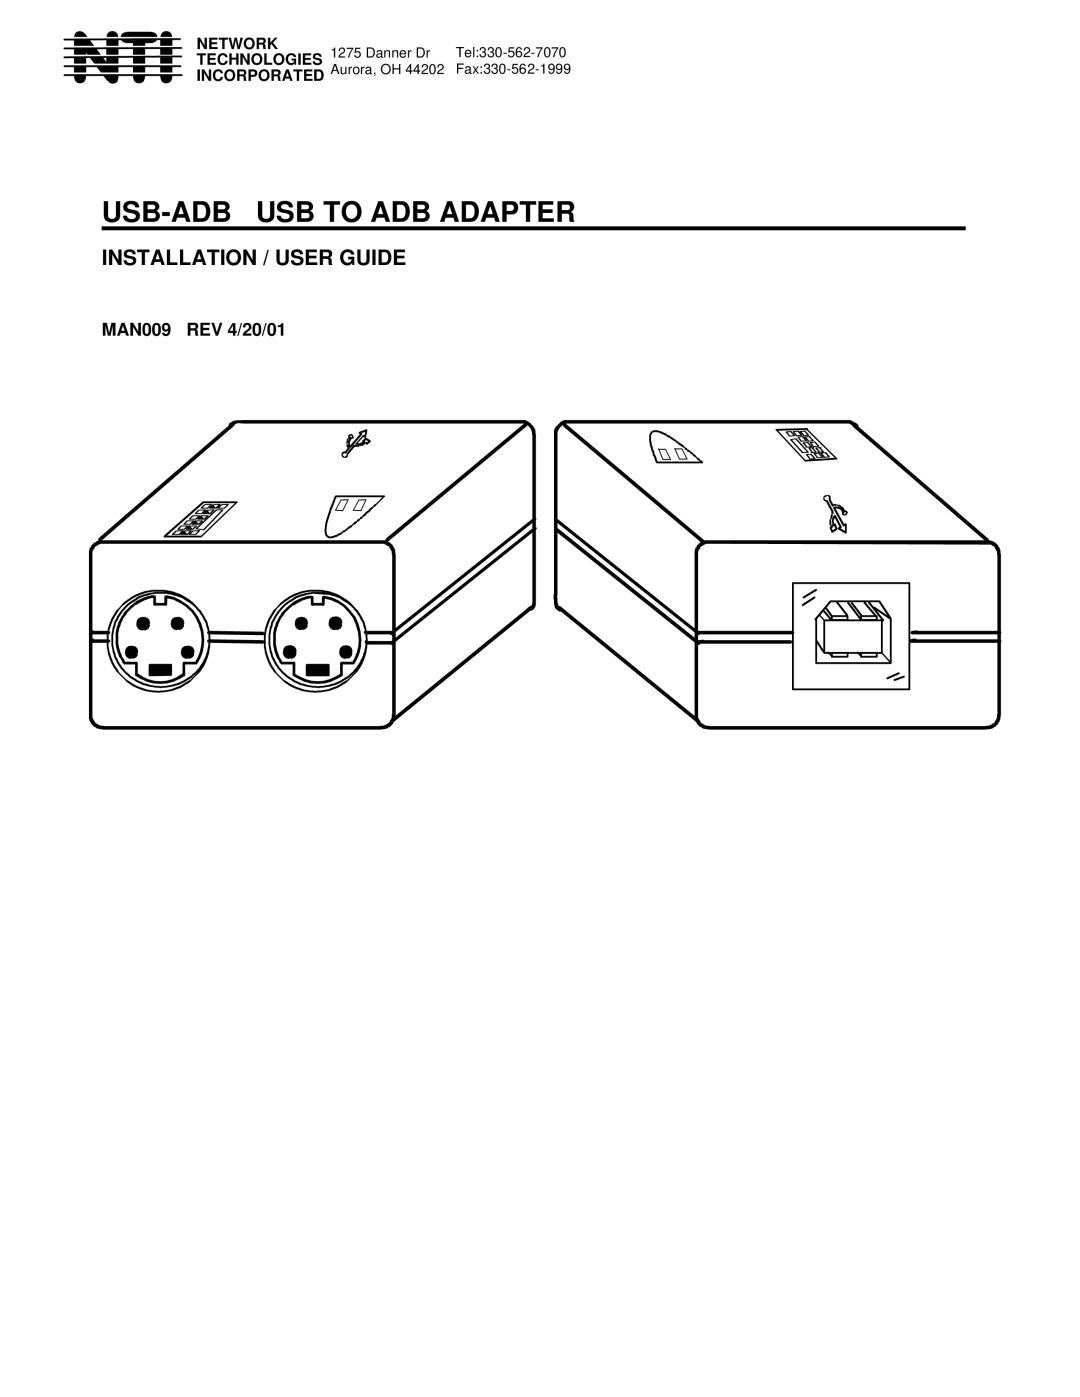 Network Technologies MAN009 manual Installation / User Guide, Usb-Adb Usb To Adb Adapter, Danner Dr, Tel330-562-7070 